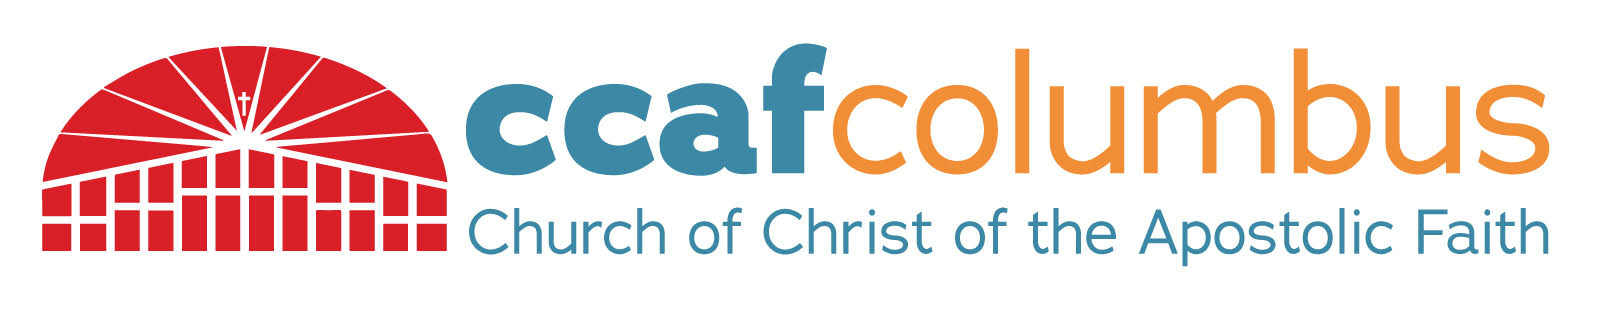 Church of Christ of the Apostolic Faith logo